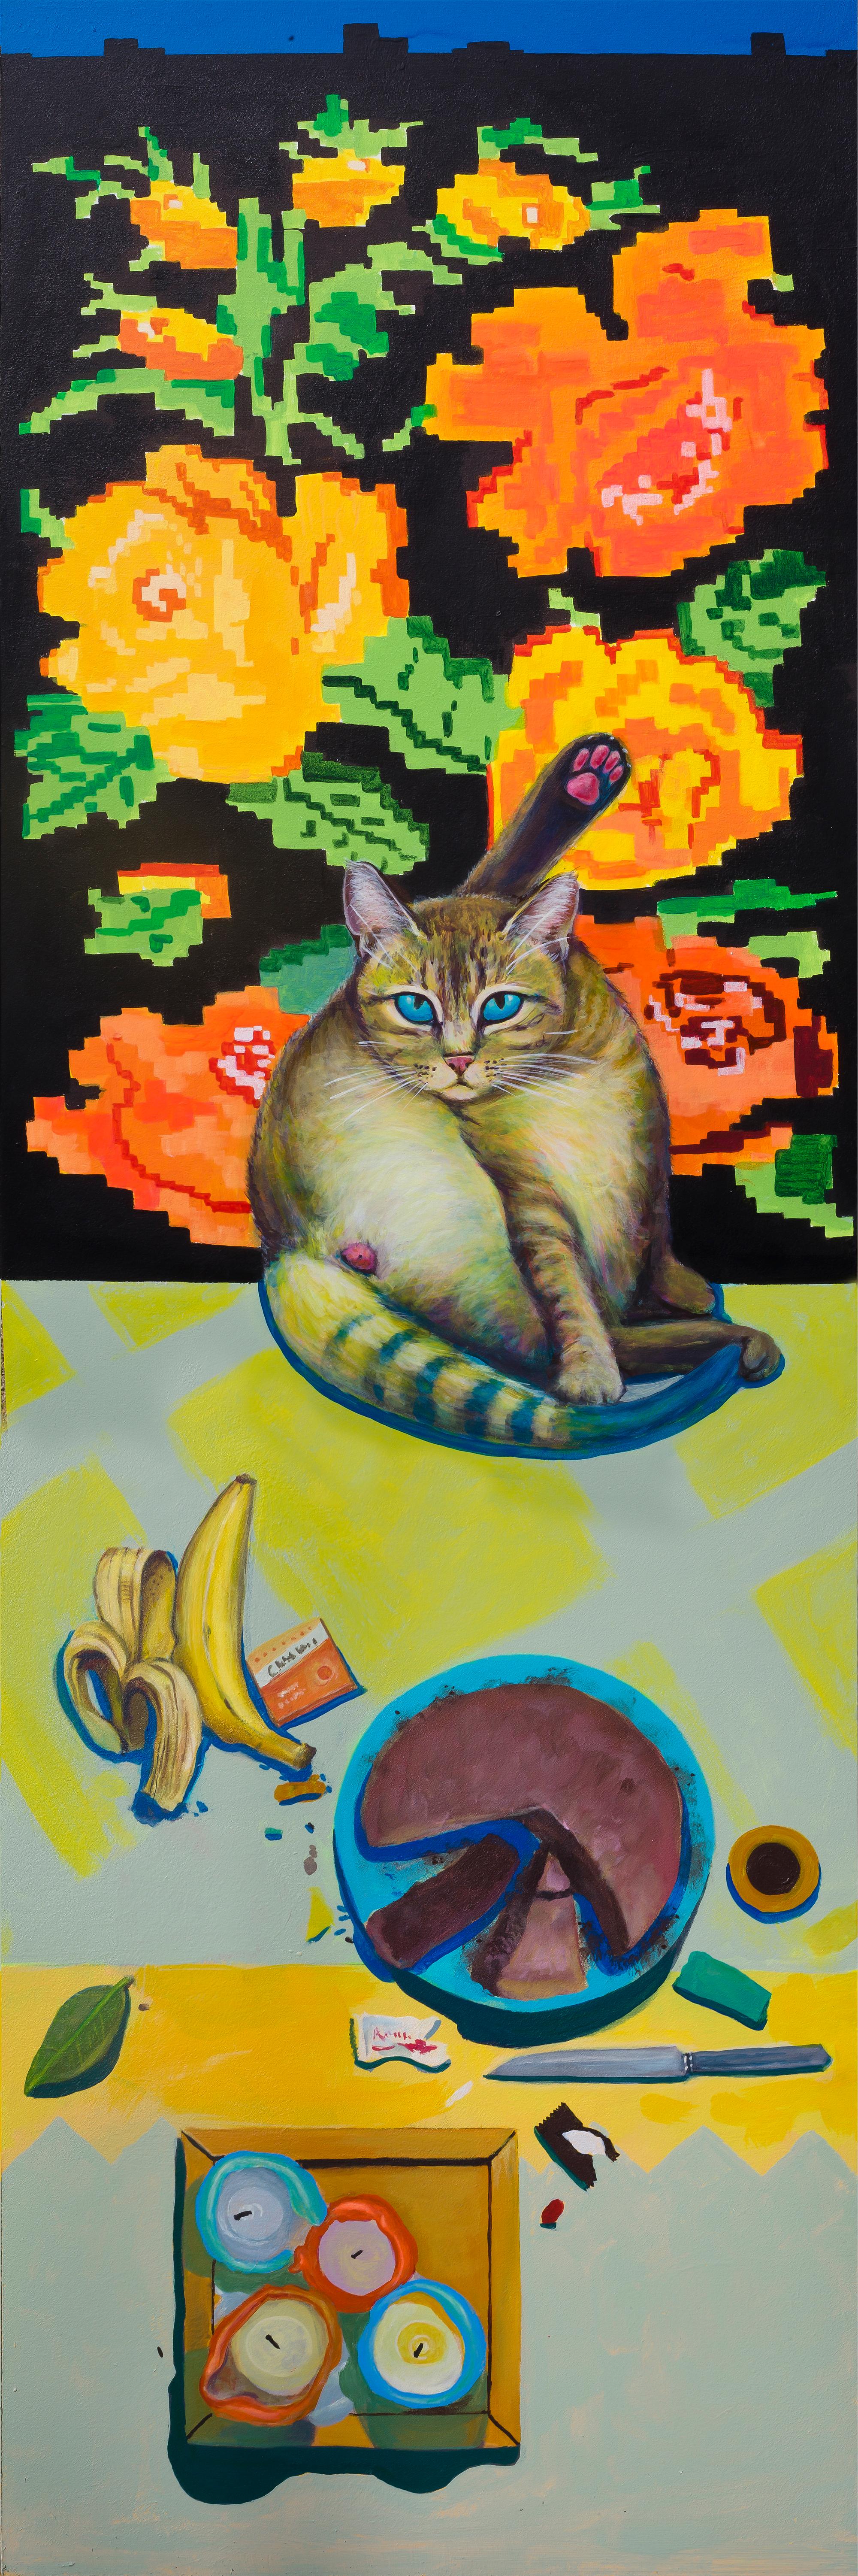 Natasha Lelenco Still-Life Print - Large Colorful Cat Portrait With Still Life. Limited Edition 5/25 On Dibond